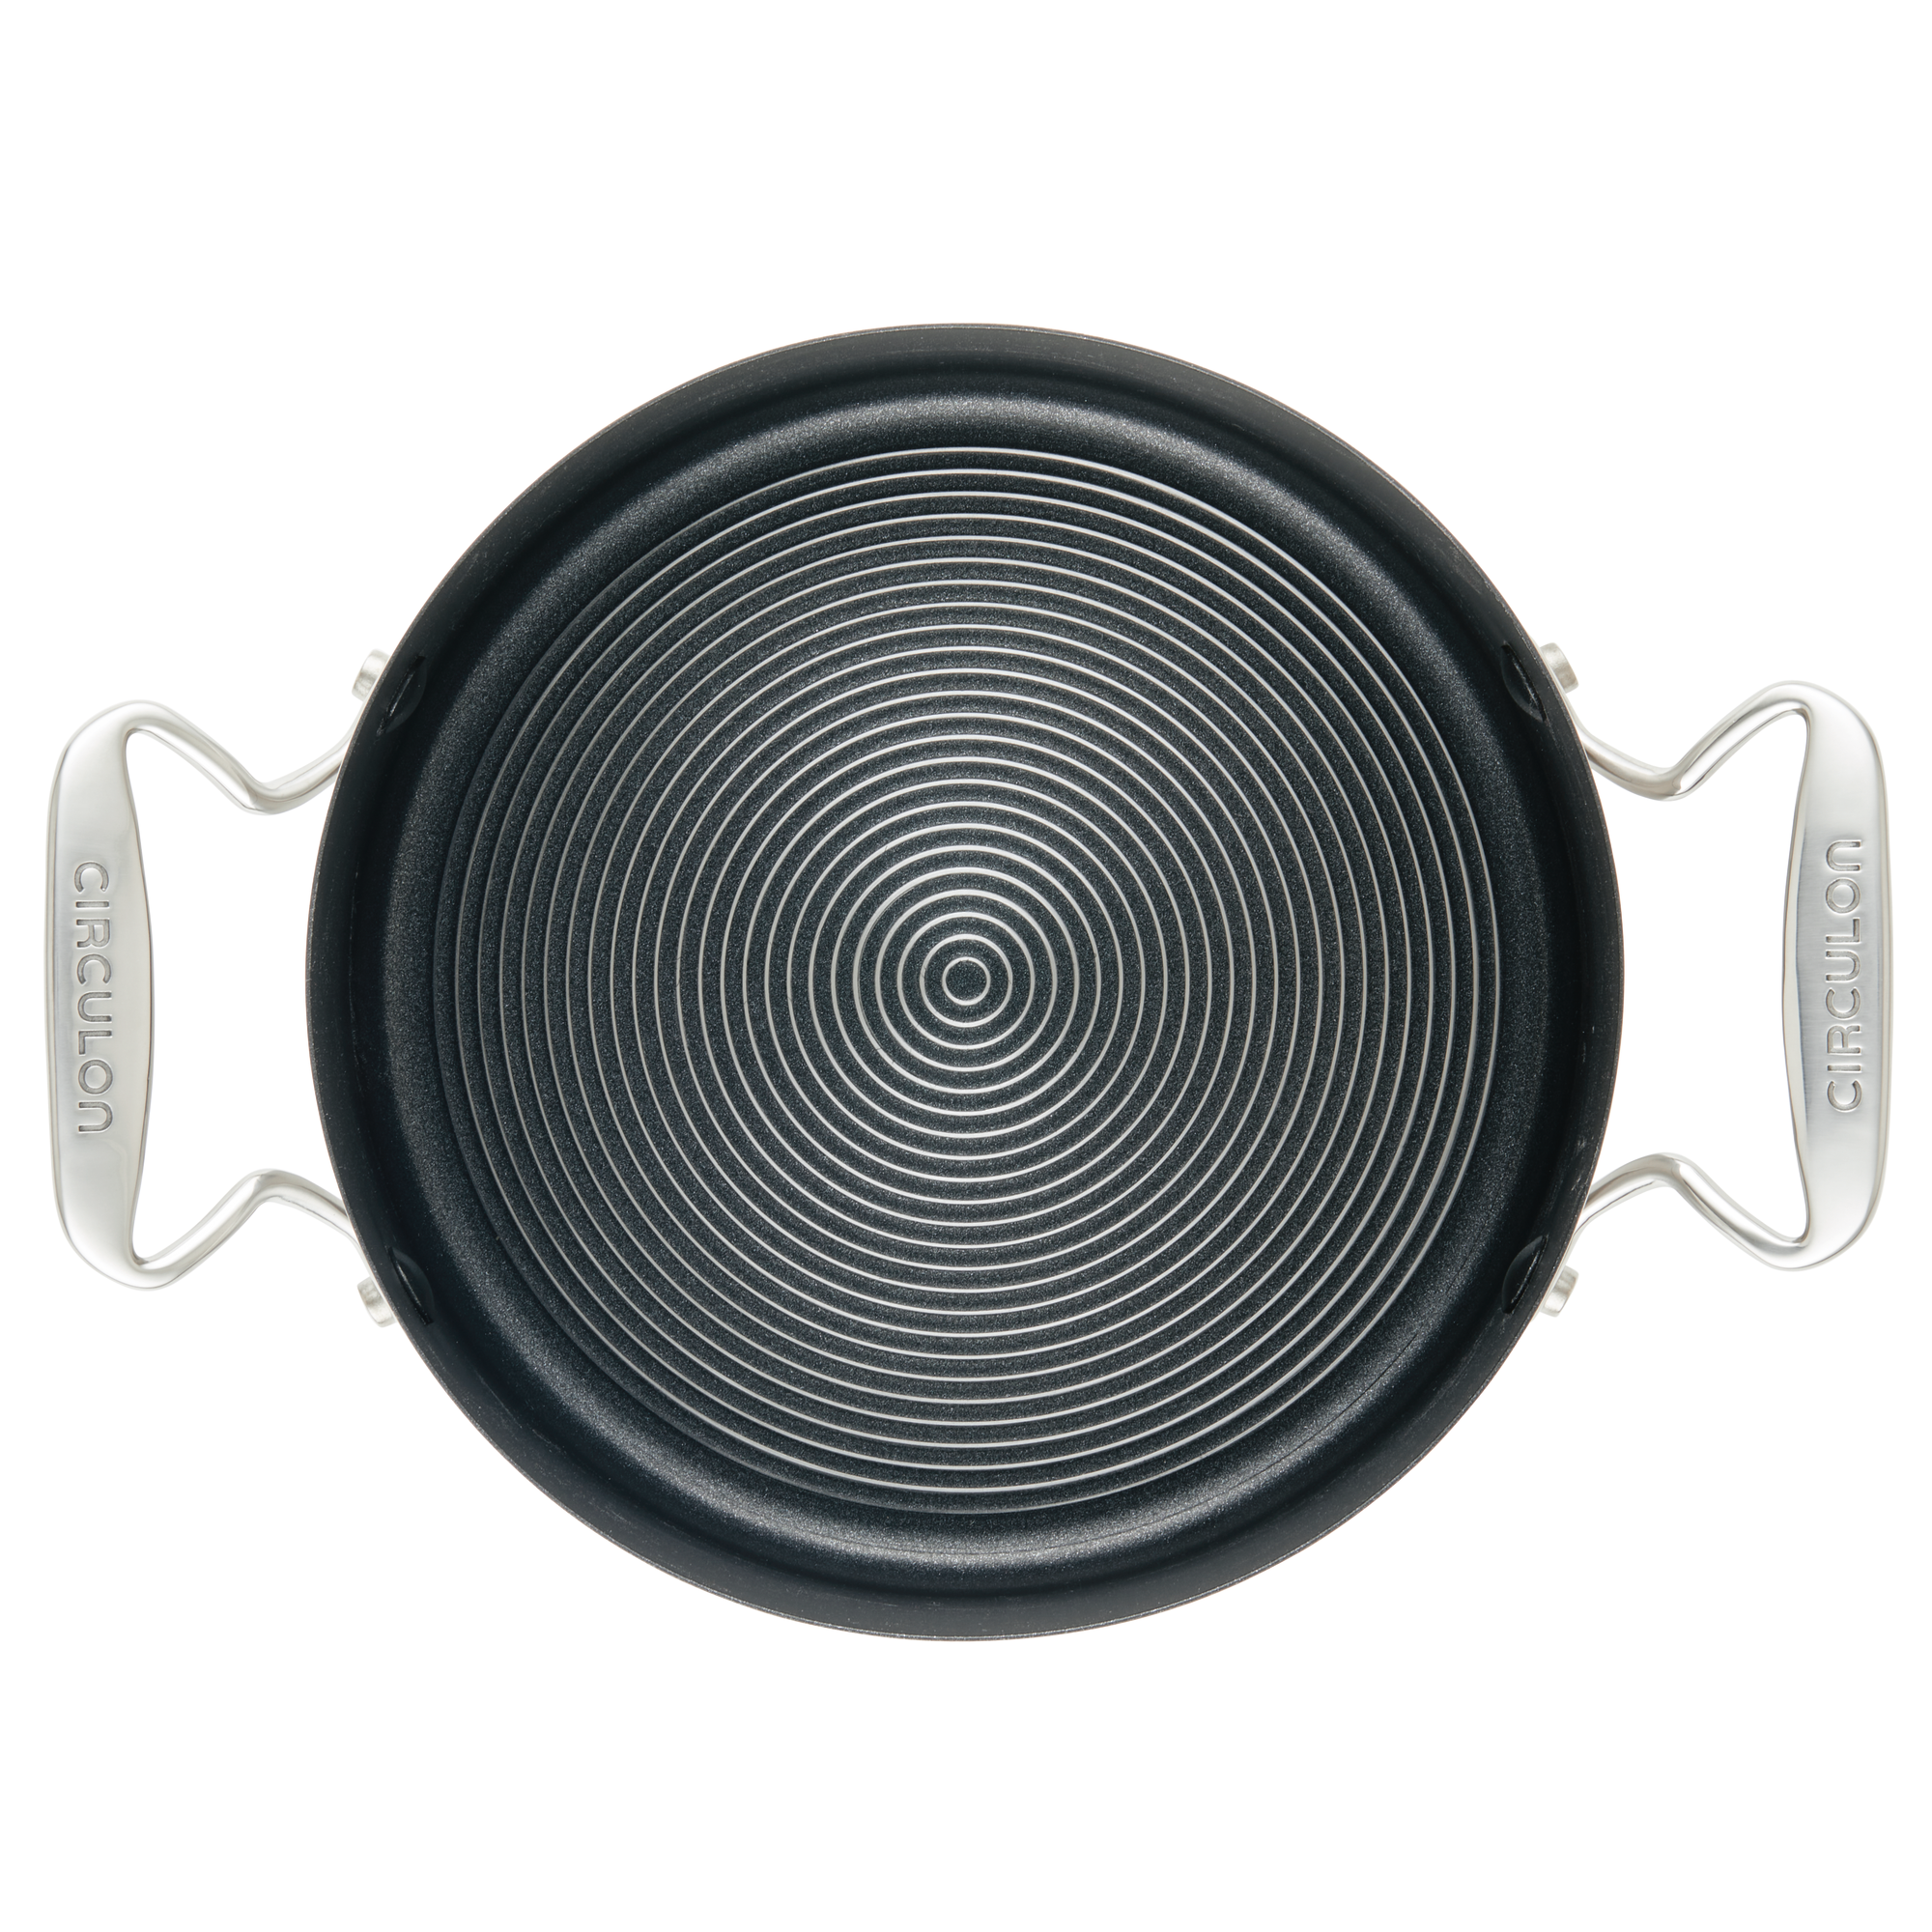 Circulon Genesis Hard-Anodized Nonstick 11-inch Round Grill Pan